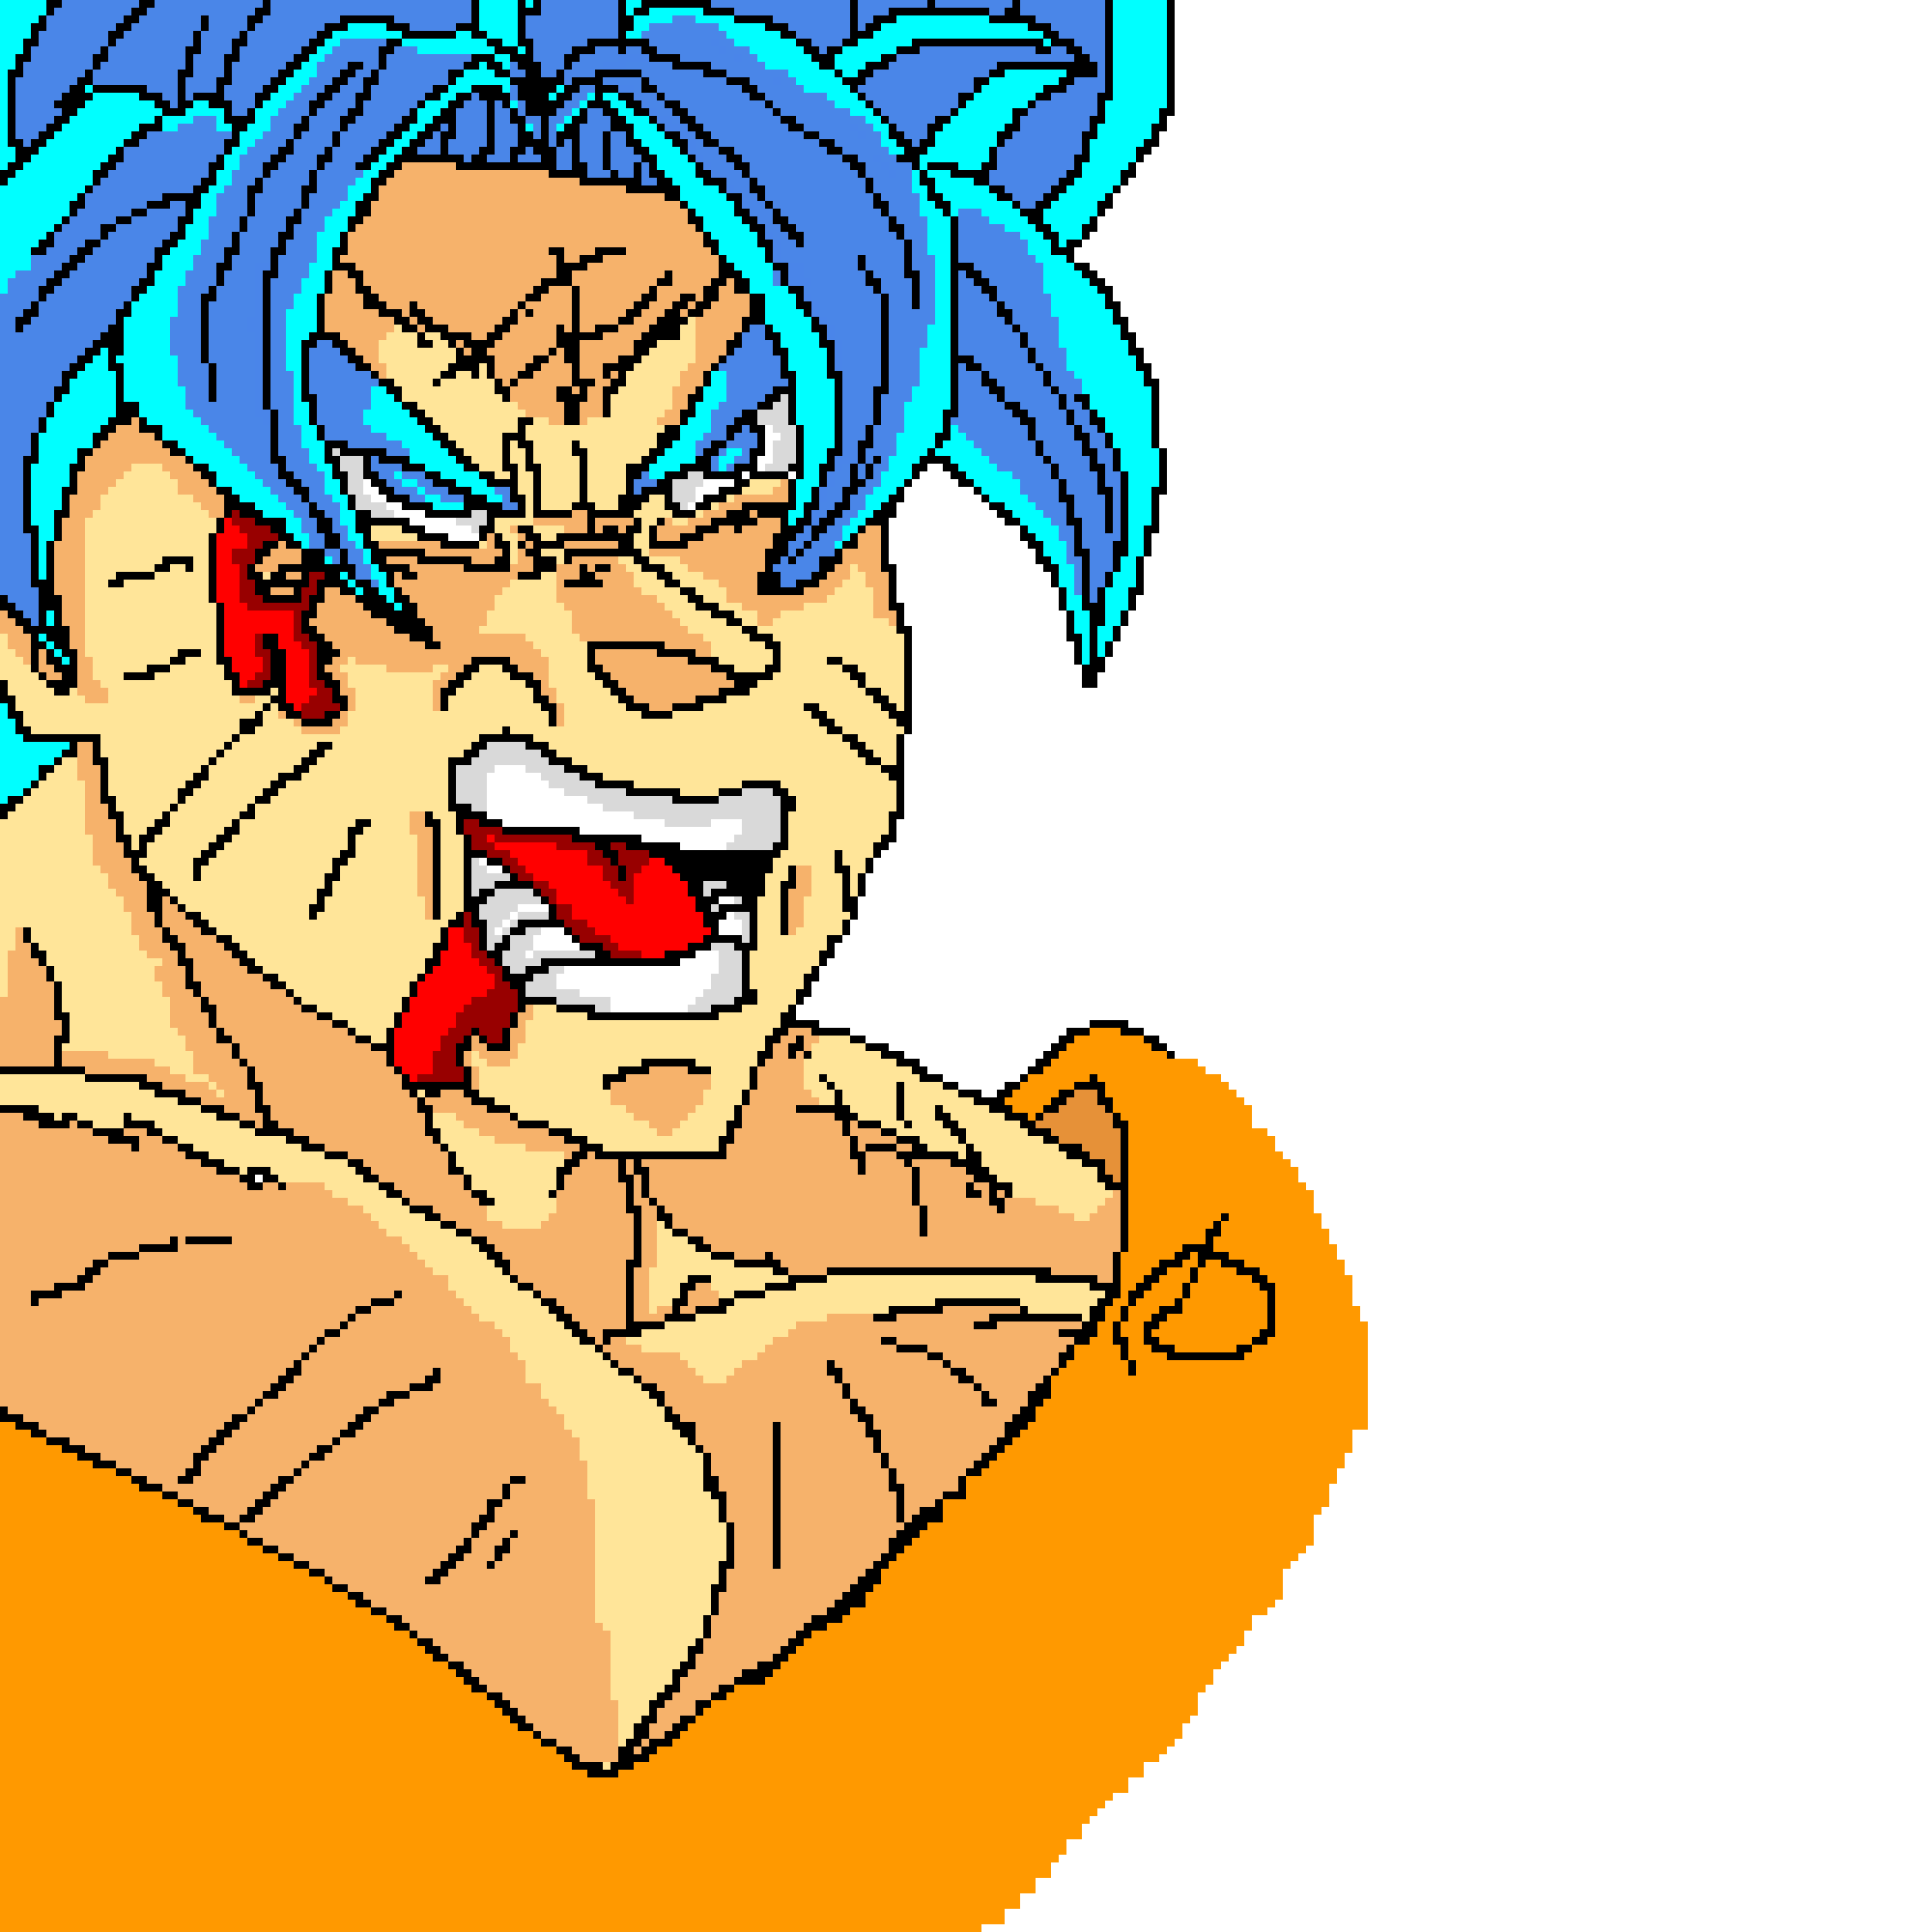 Goku (Super Saiyan God Super Saiyan)